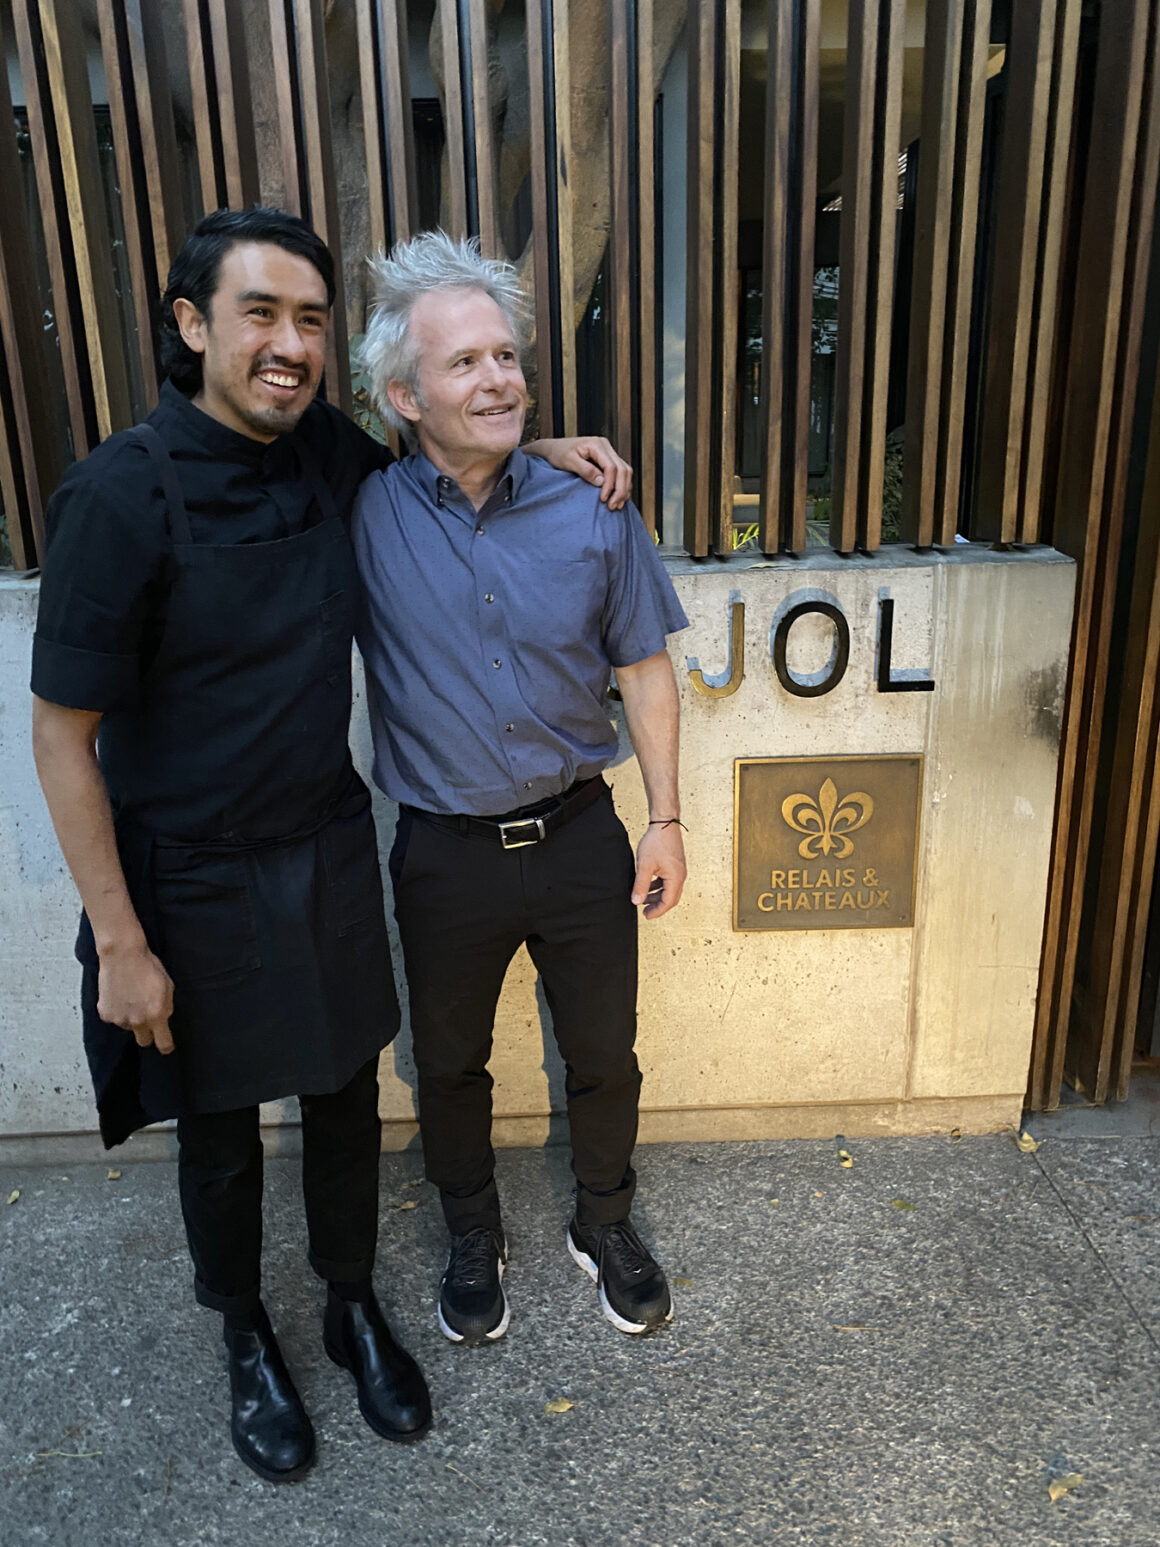 Chef Enrique Olvera opened Pujol in 2000